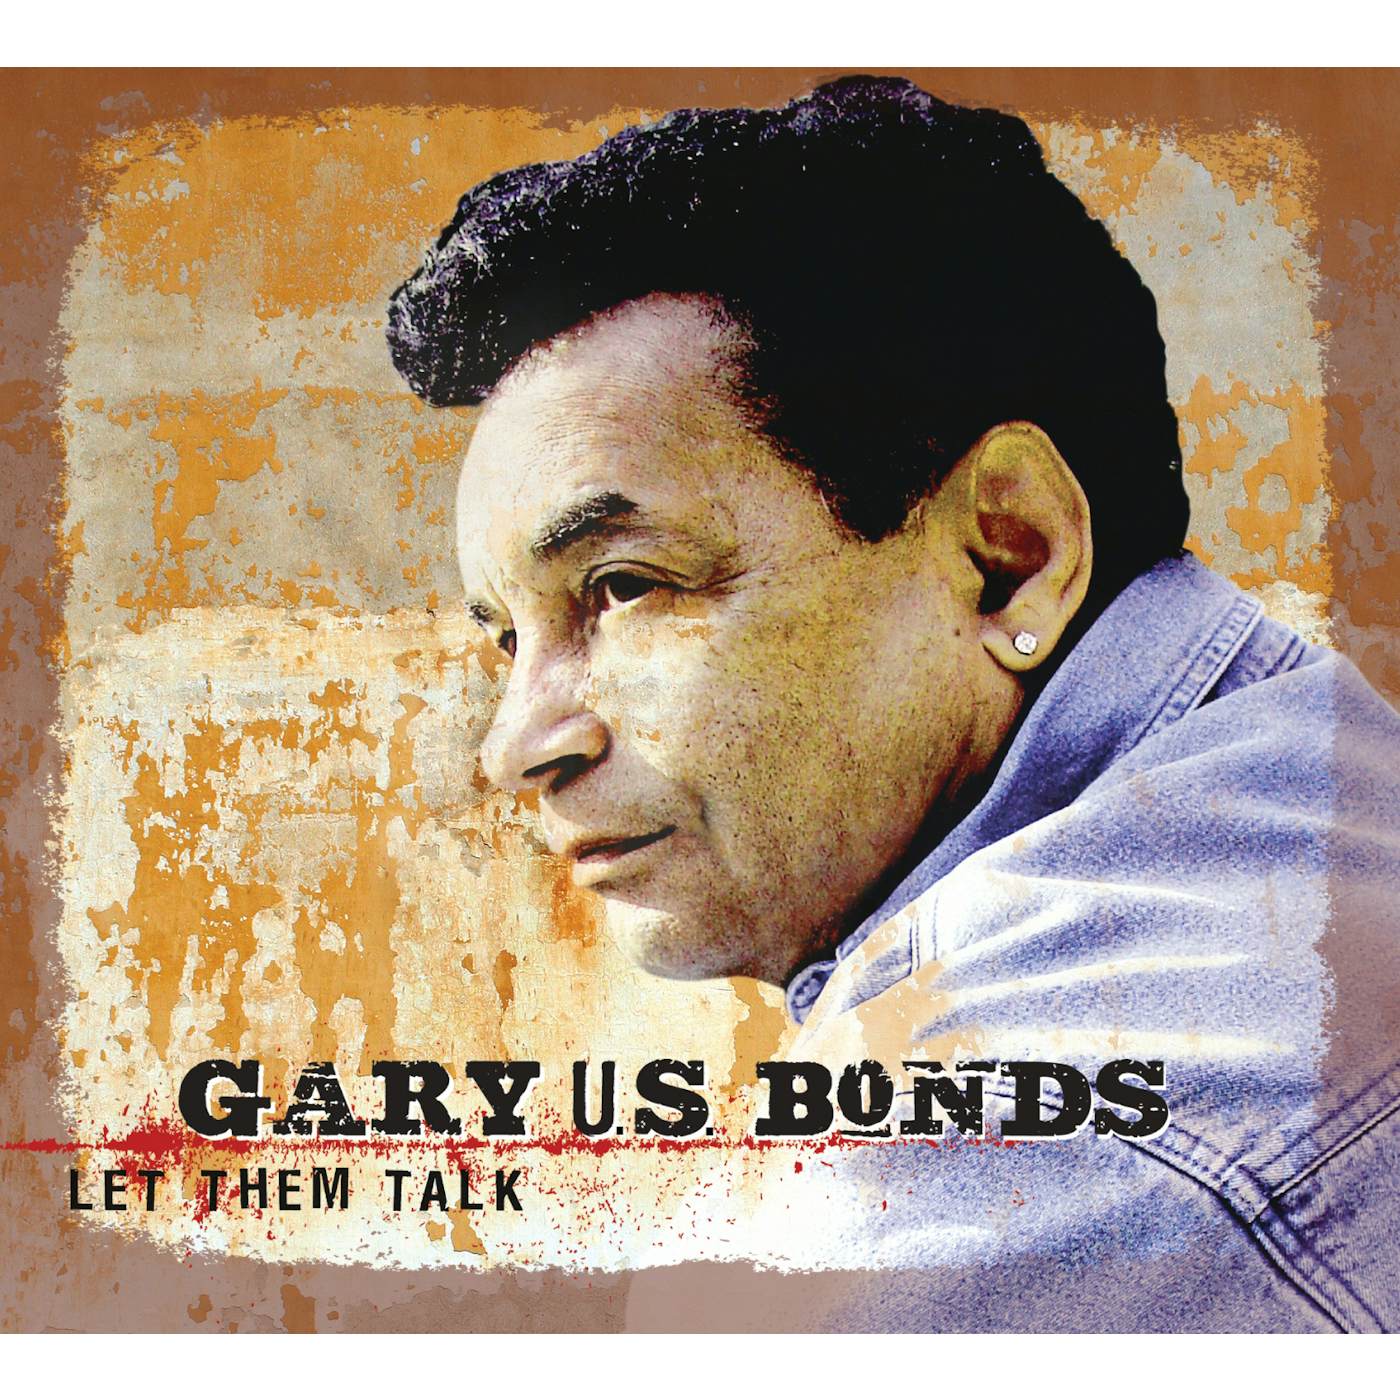 Gary U.S. Bonds LET THEM TALK CD